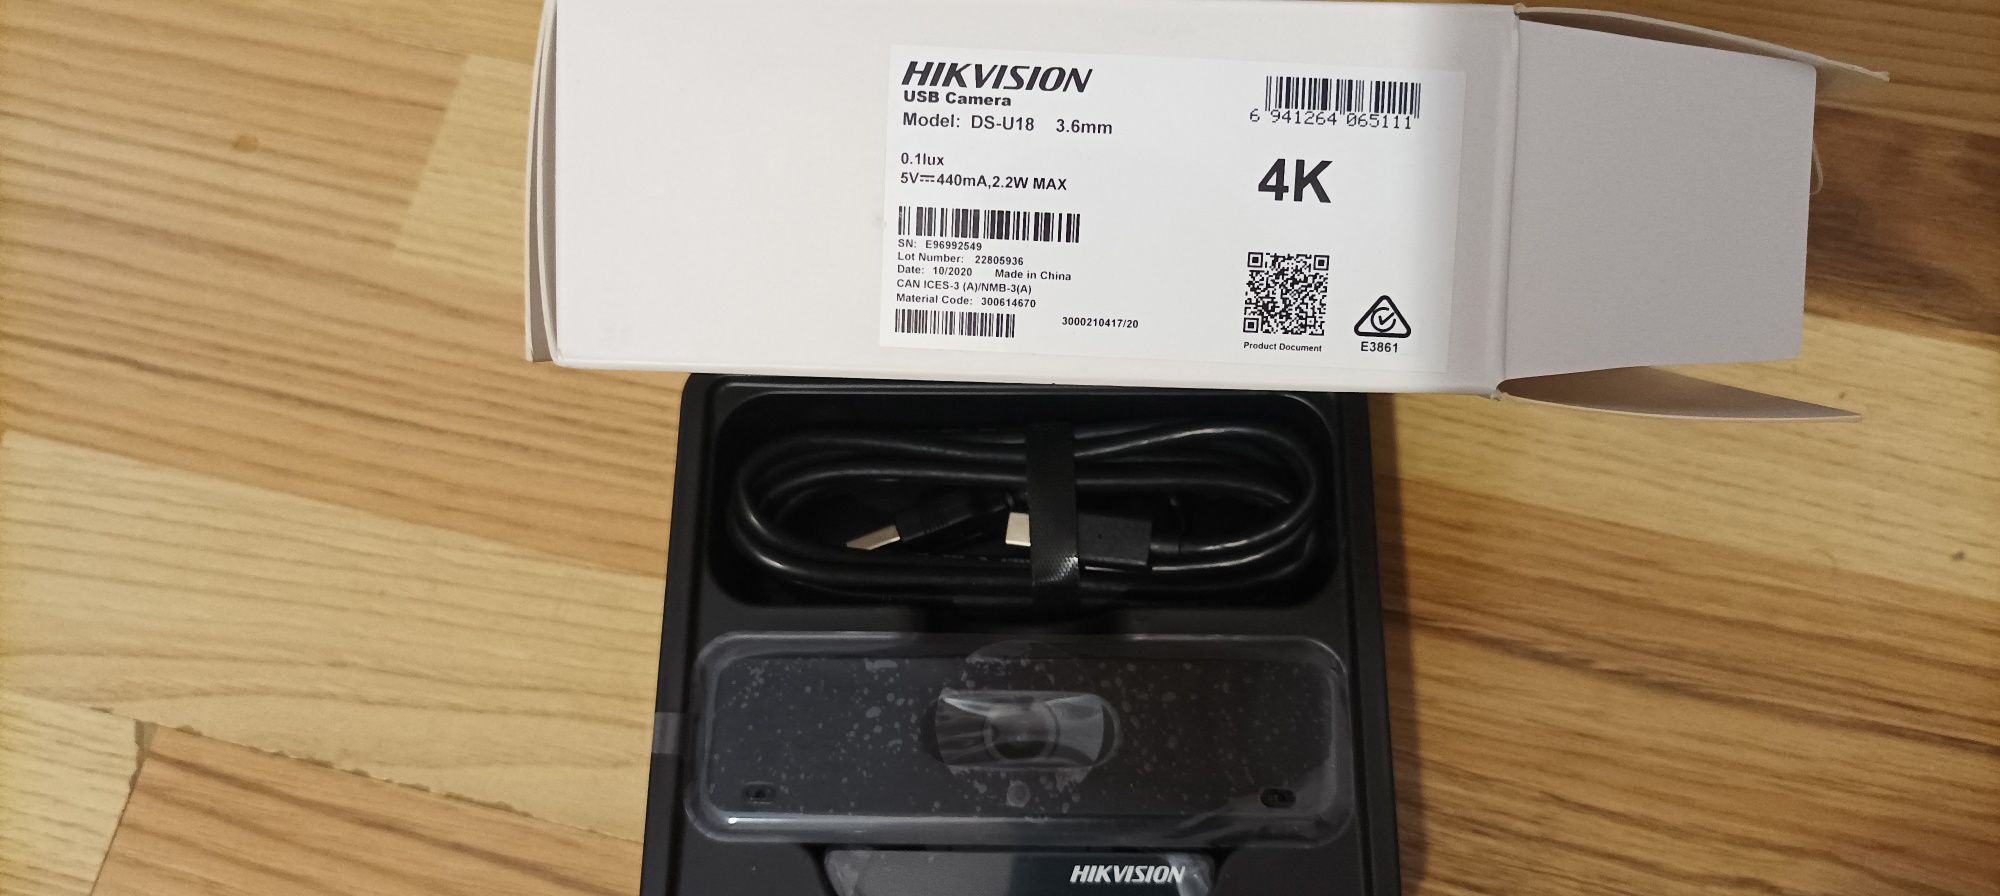 HikVision 4K HD Camera